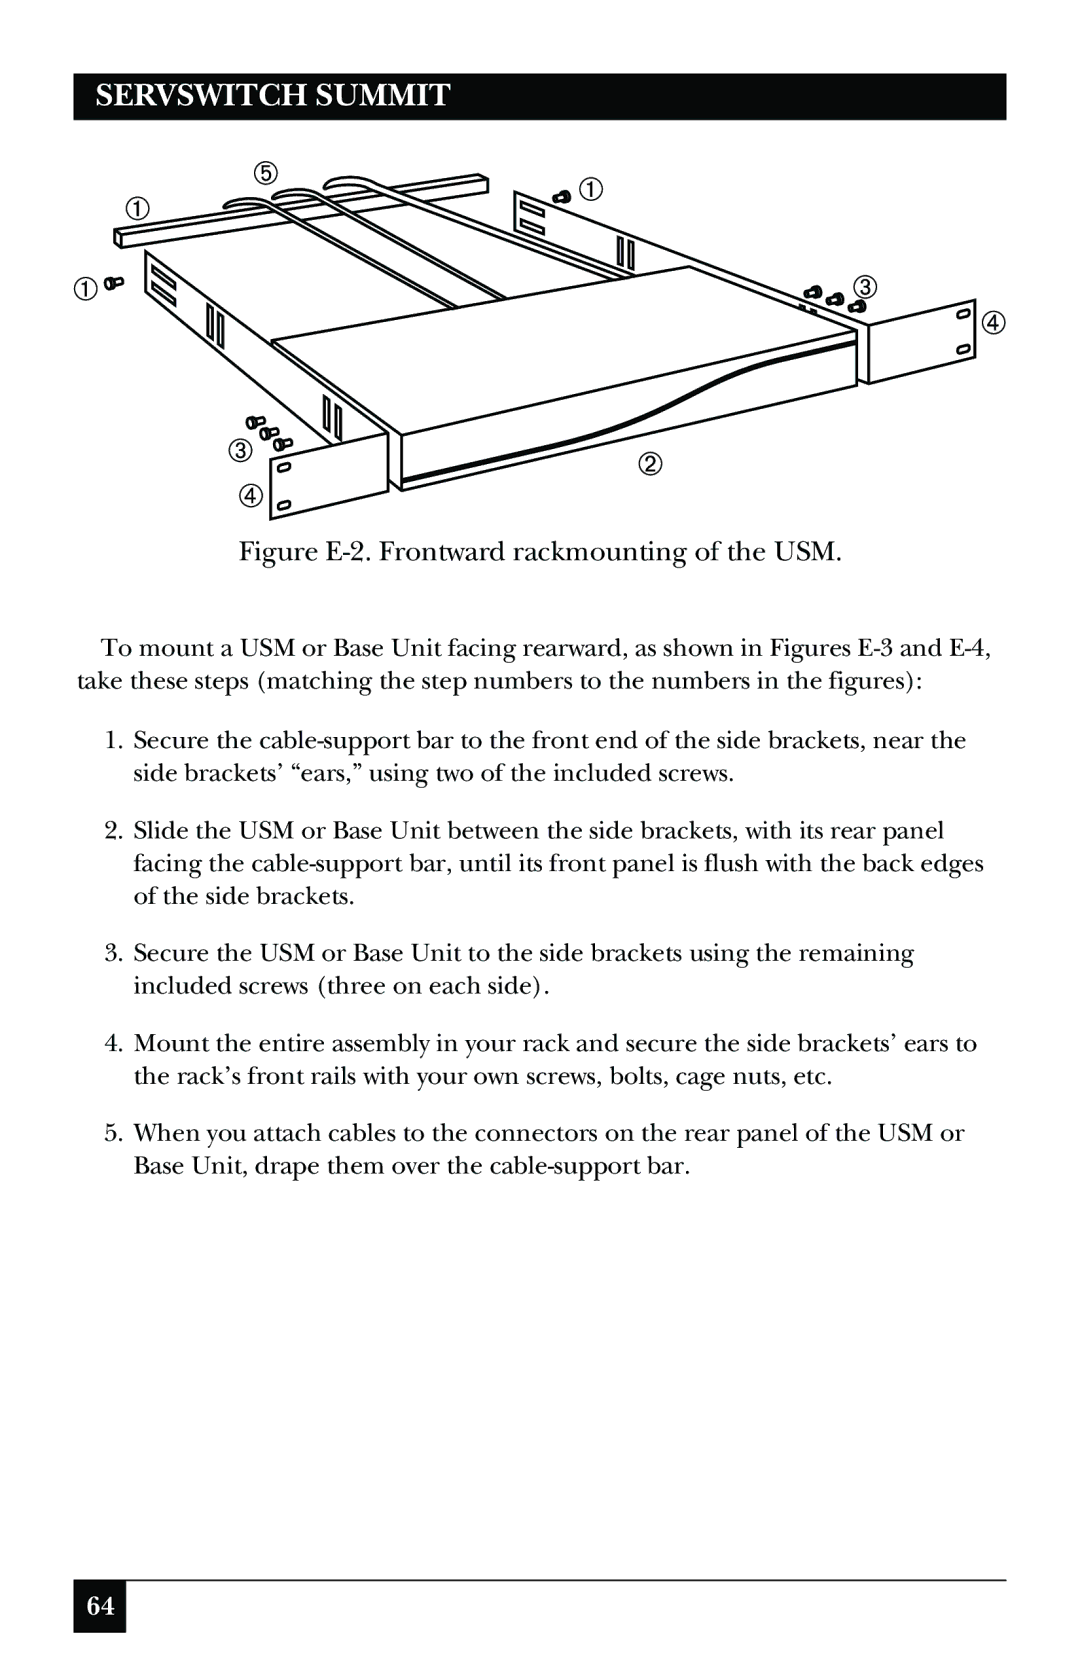 Black Box KV1500A manual Figure E-2. Frontward rackmounting of the USM 